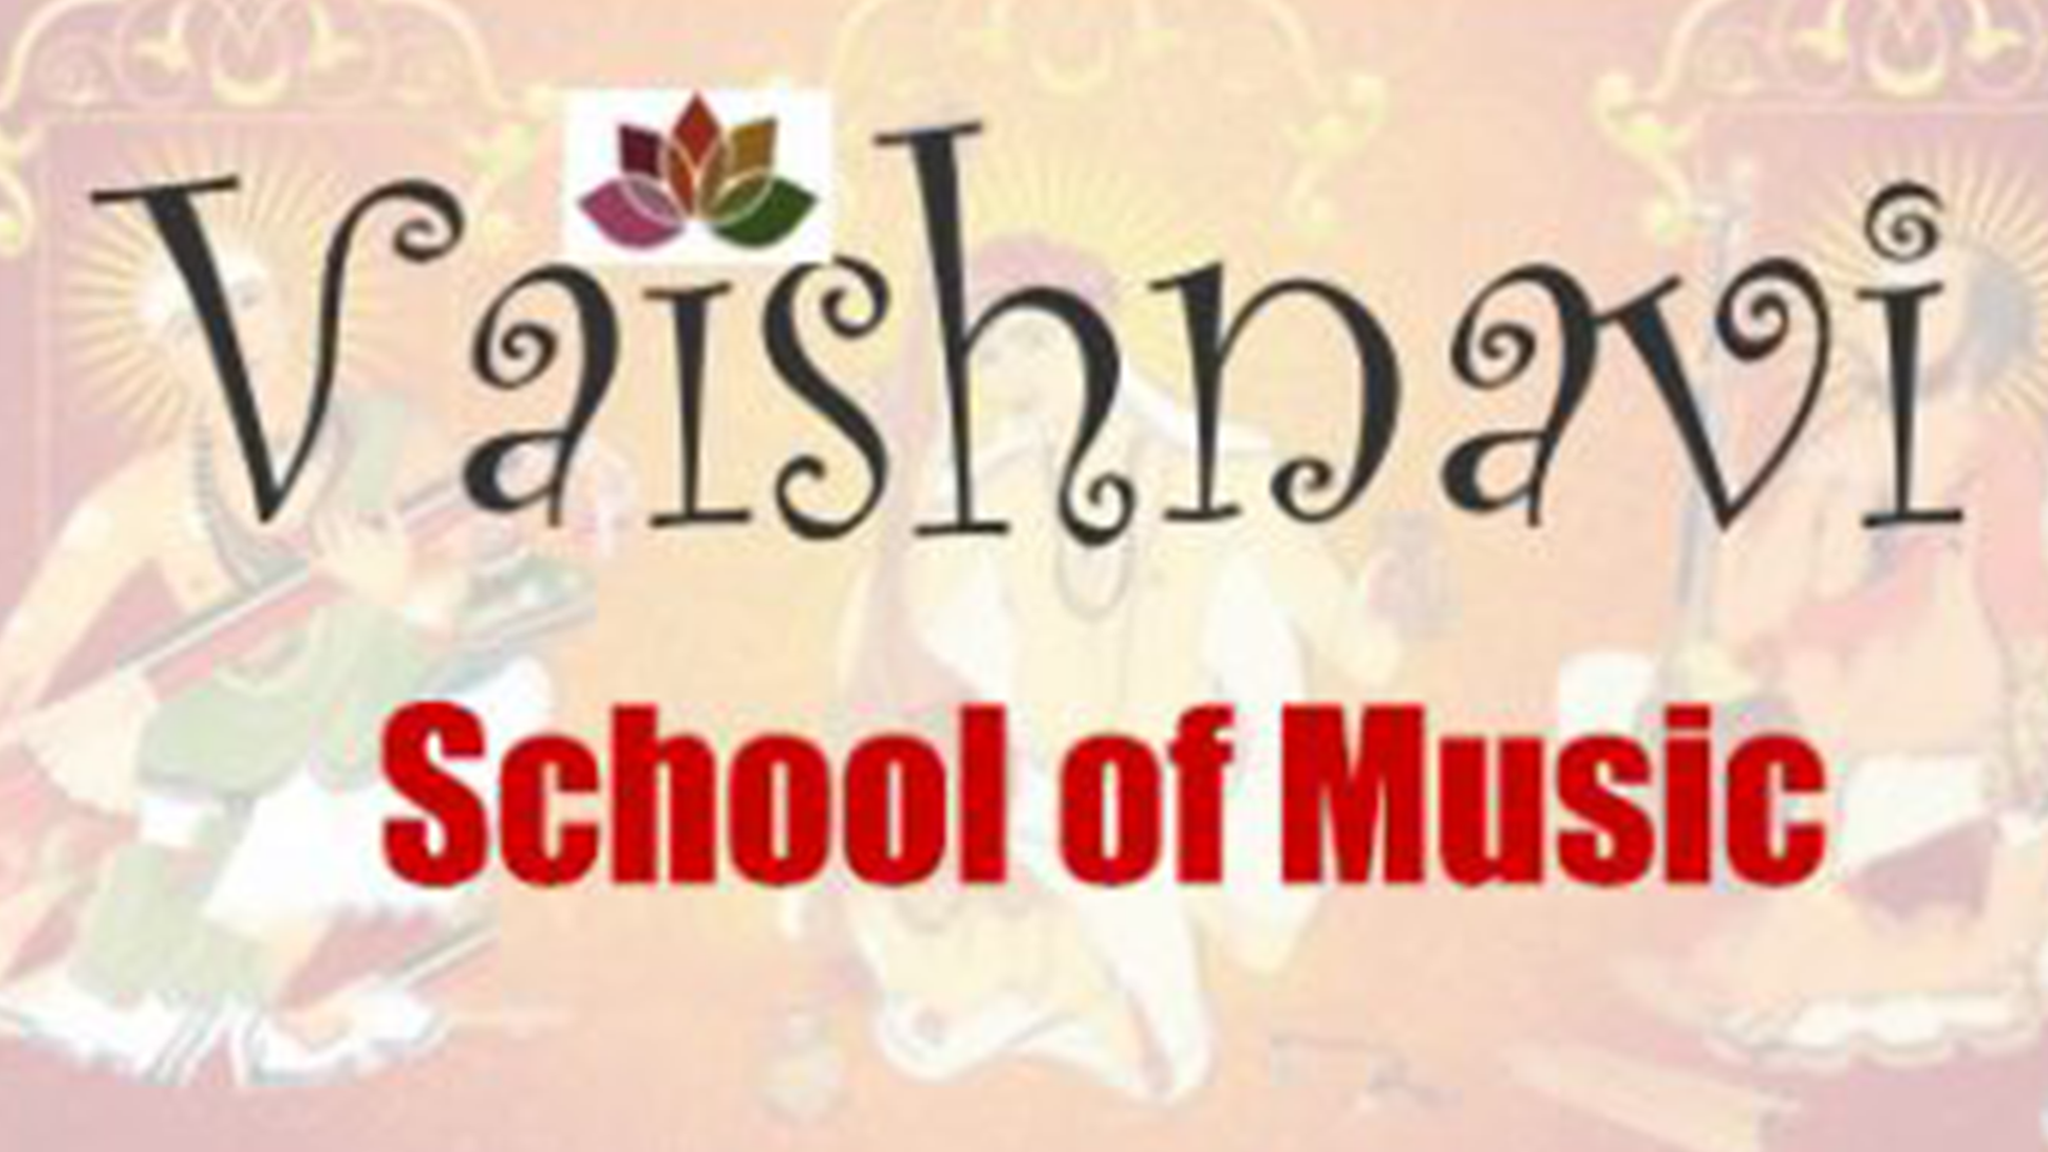 Vaishnavi School Of Music - Calligraphy - HD Wallpaper 